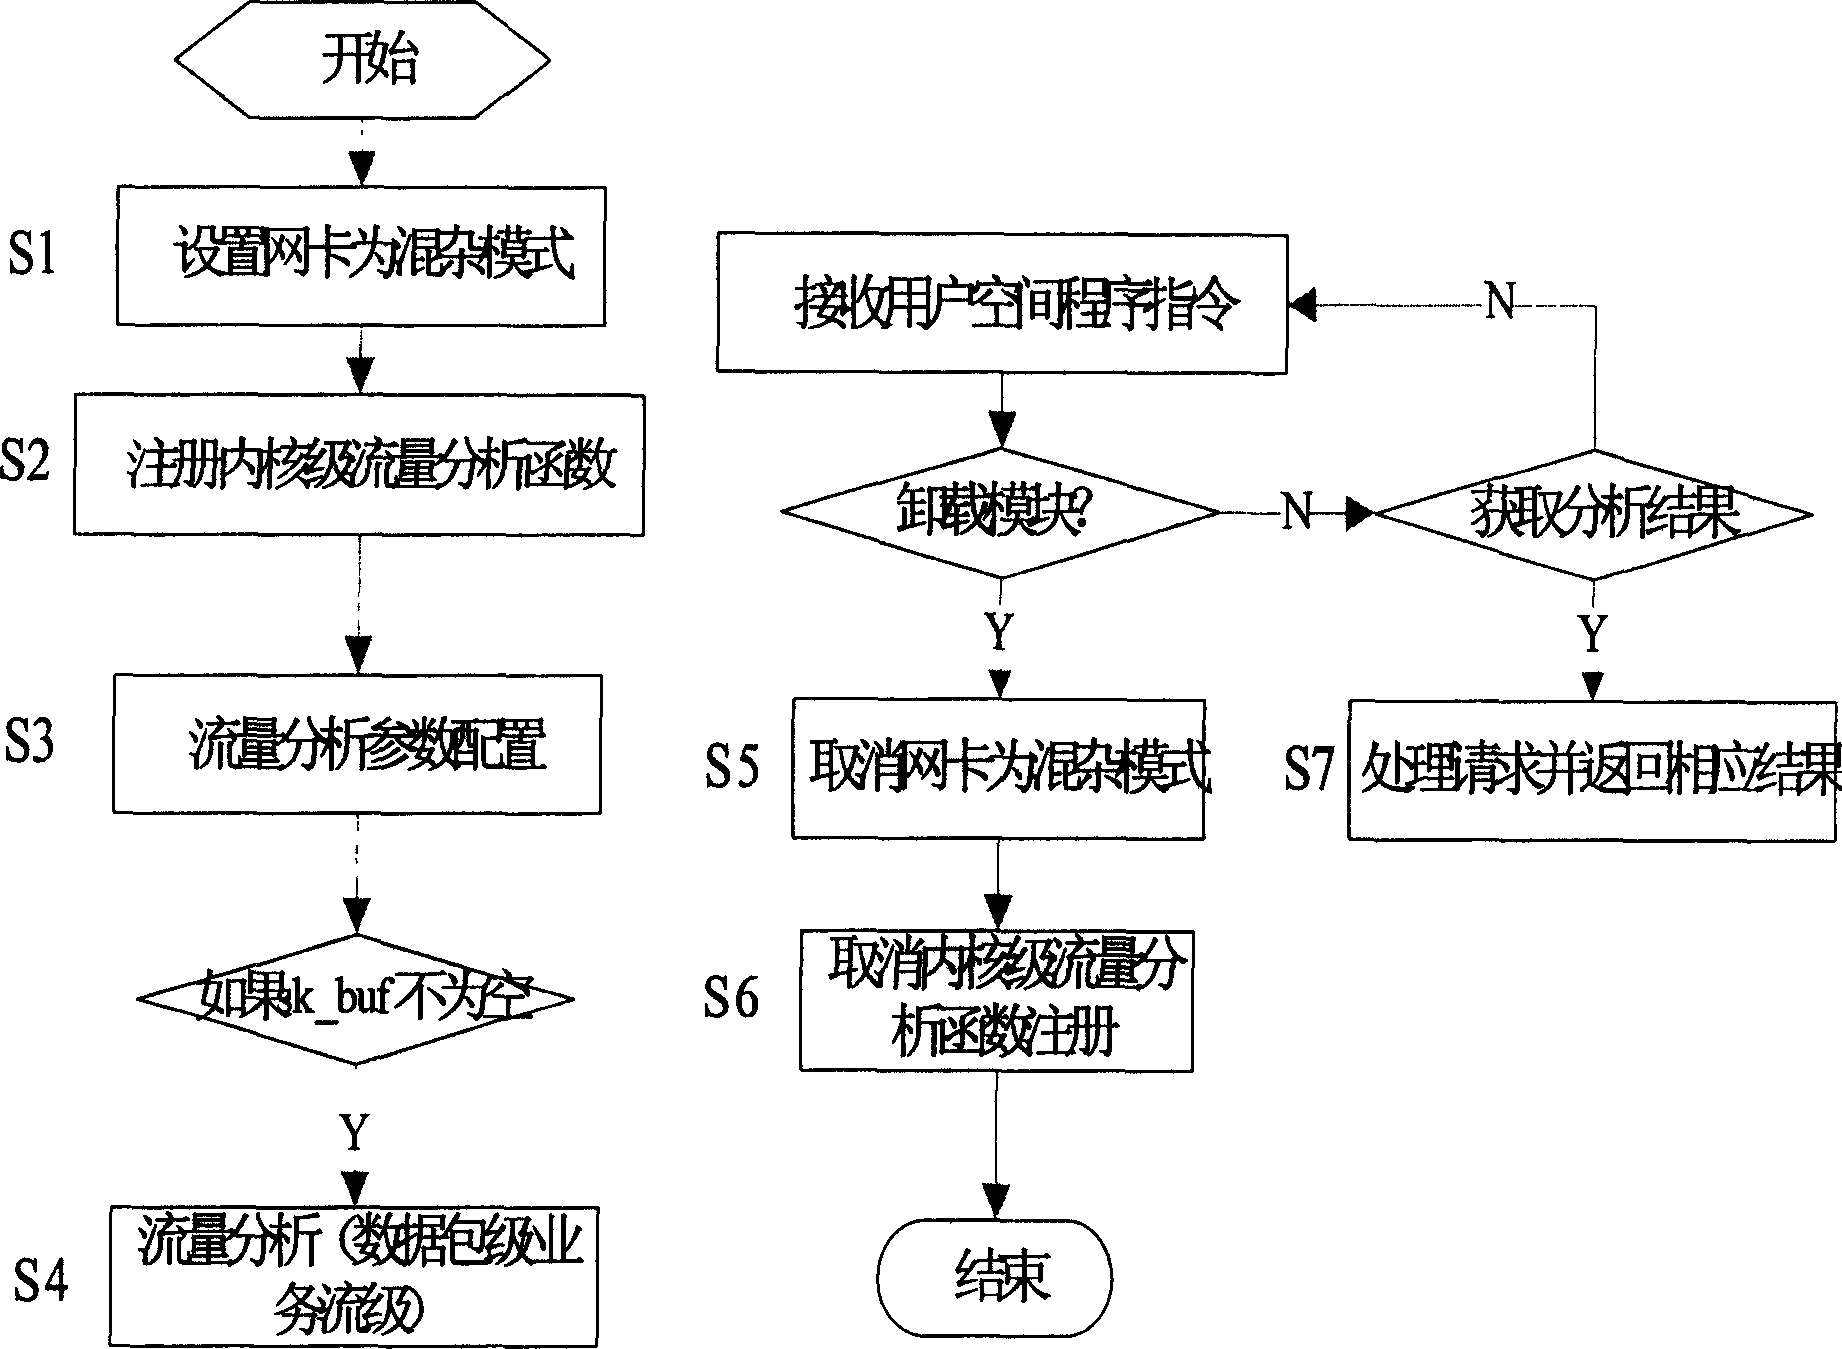 Flow analysis method based on Linux core